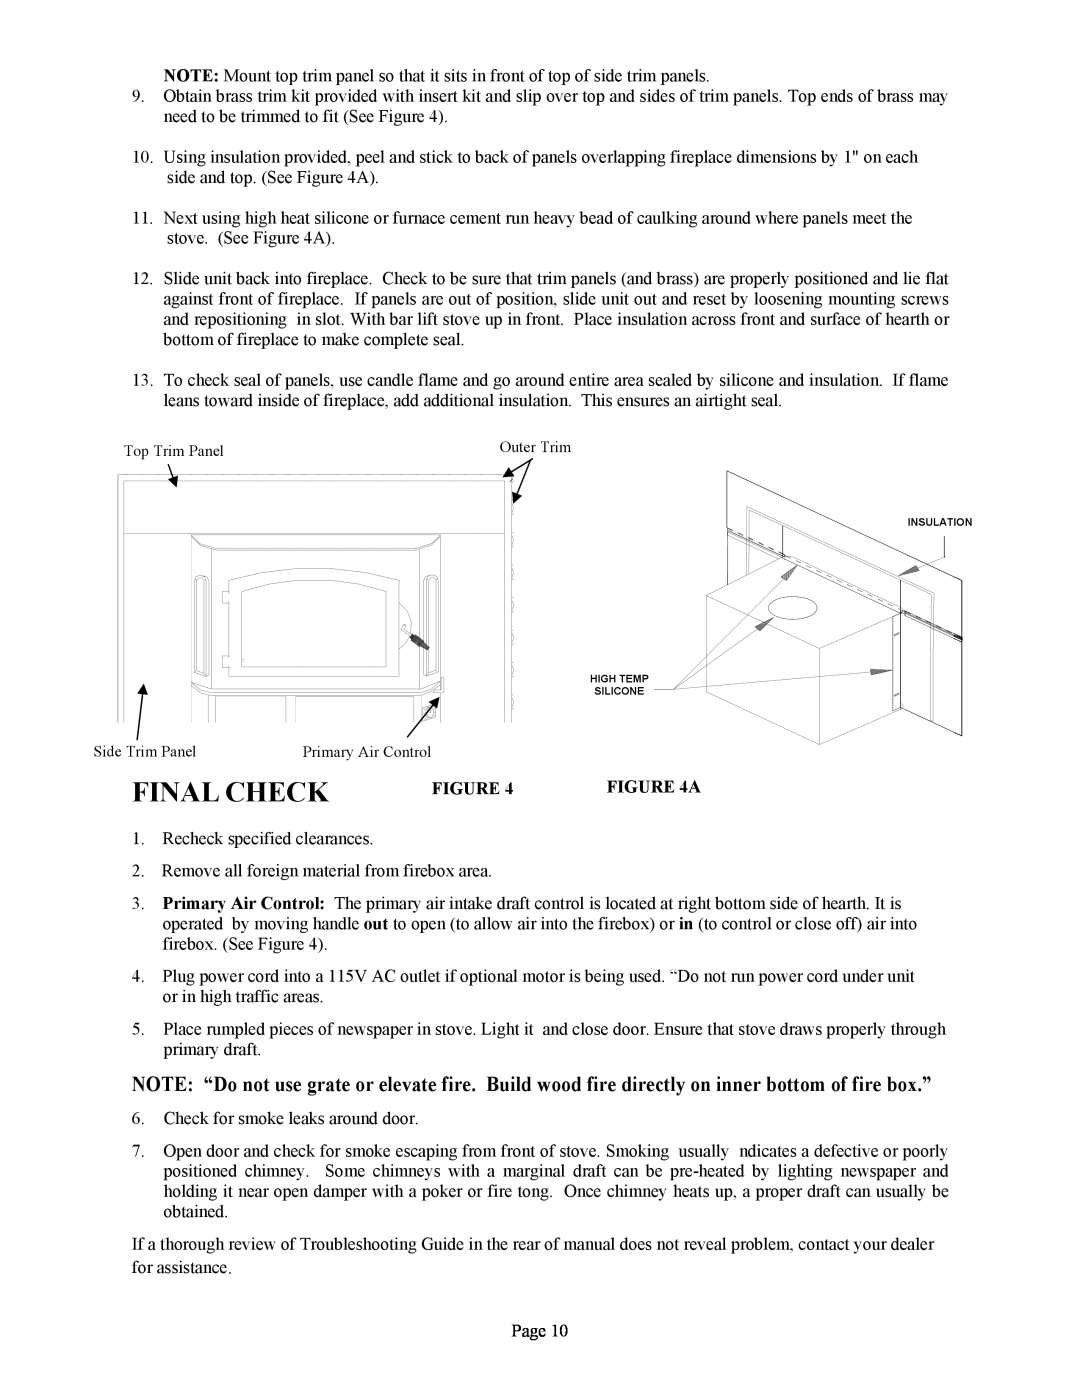 New Buck Corporation 81 installation instructions Final Check, A 